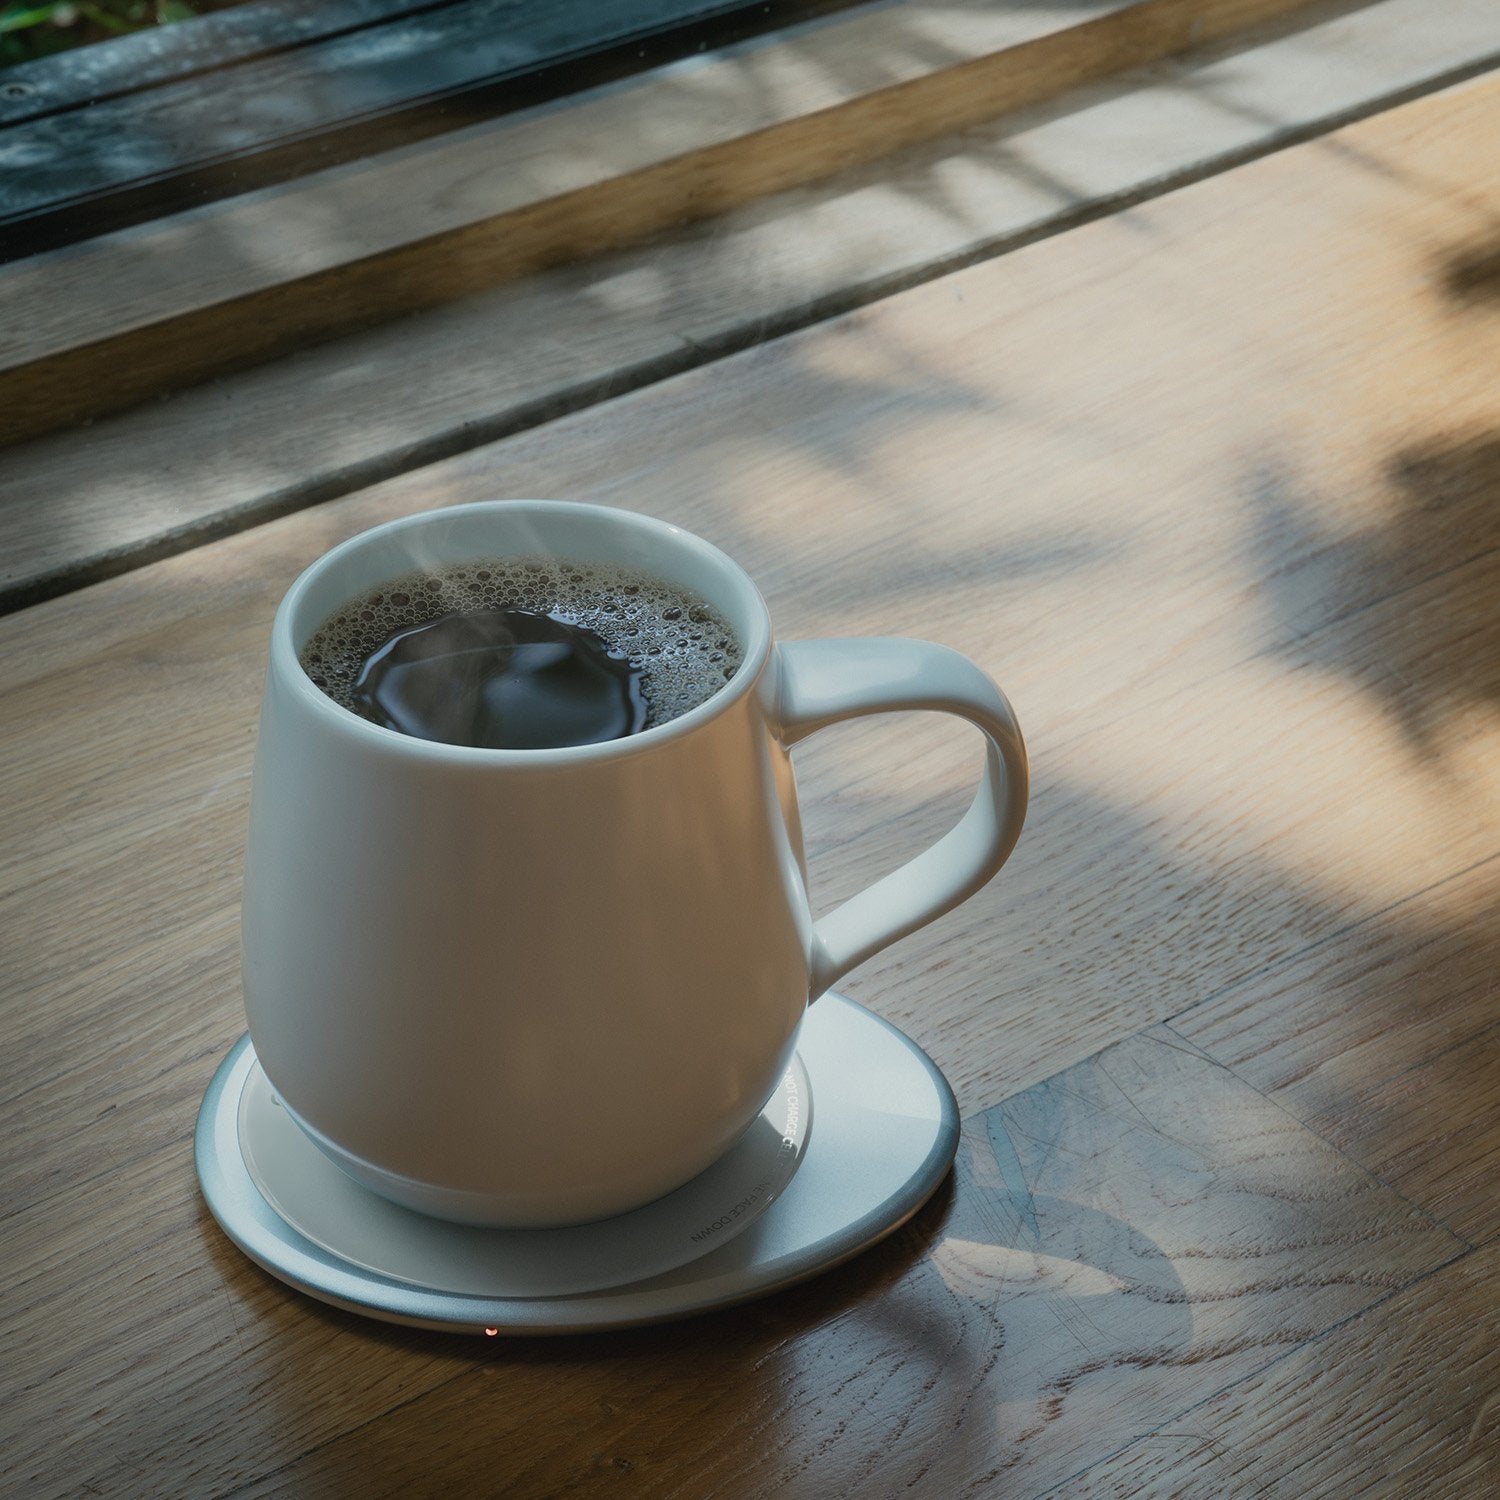 White mug with hot tea on heating pad on table